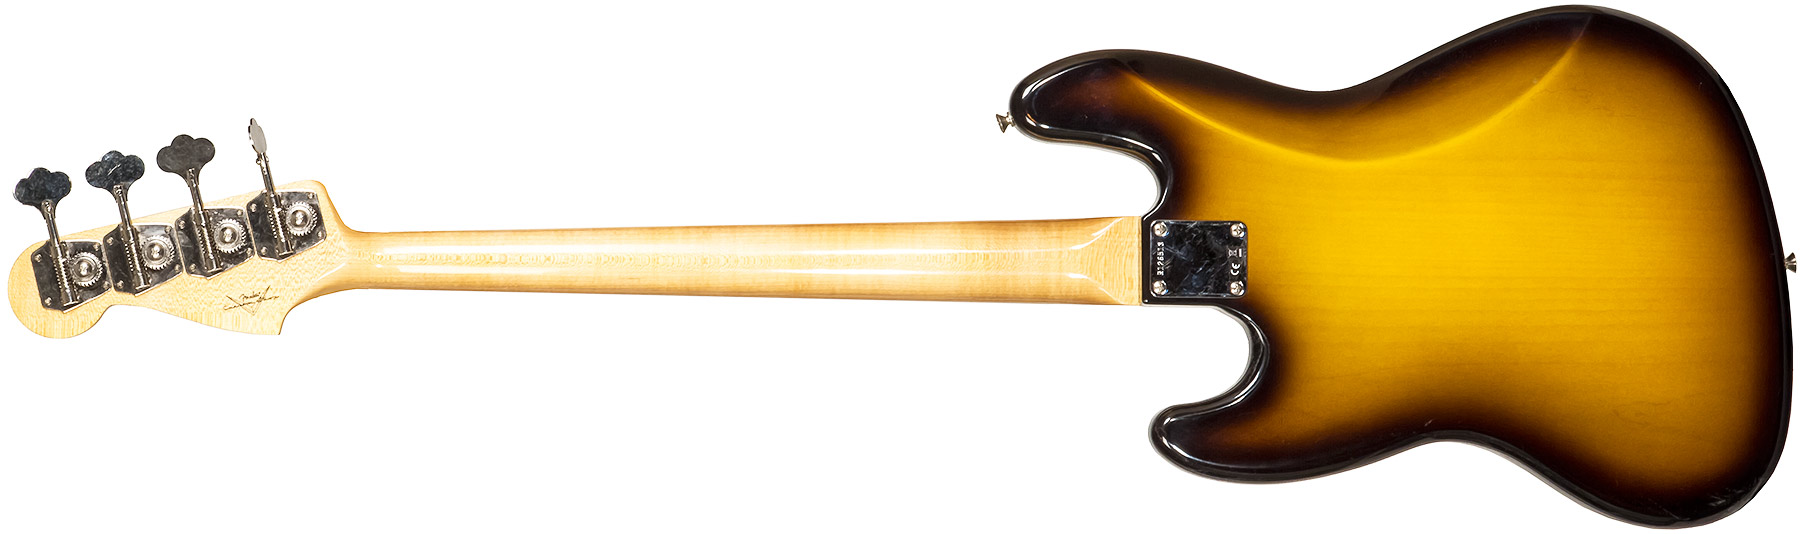 Fender Custom Shop Jazz Bass 1964 Rw #r126513 - Closet Classic 2-color Sunburst - Solid body electric bass - Variation 1